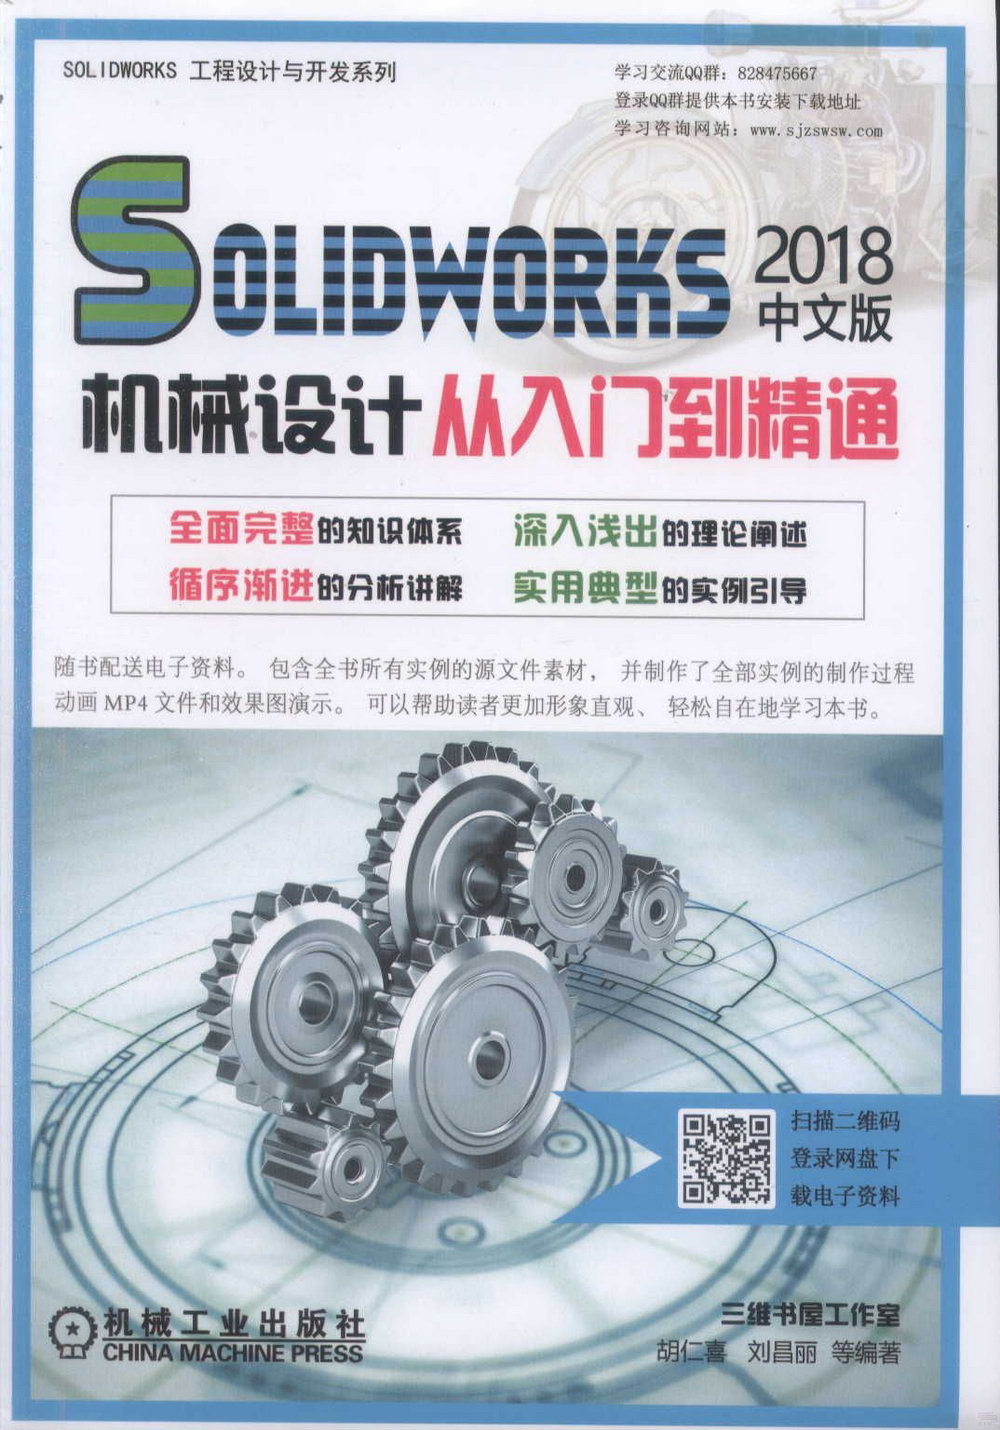 Solidworks 2018中文版機械設計從入門到精通